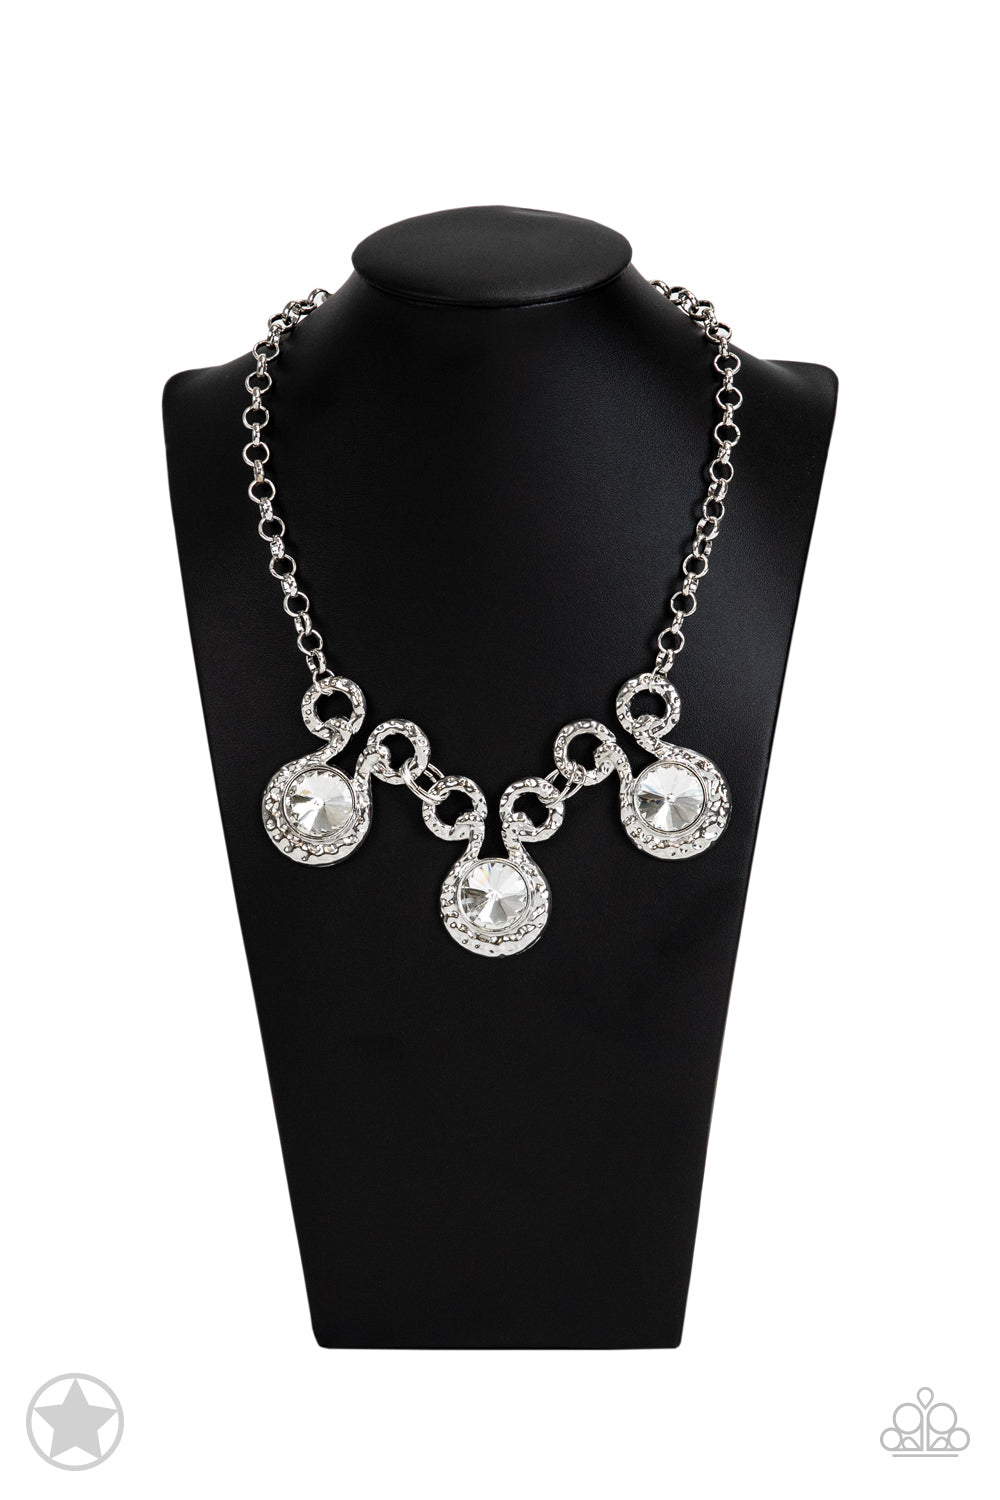 Hypnotized - silver - Paparazzi necklace